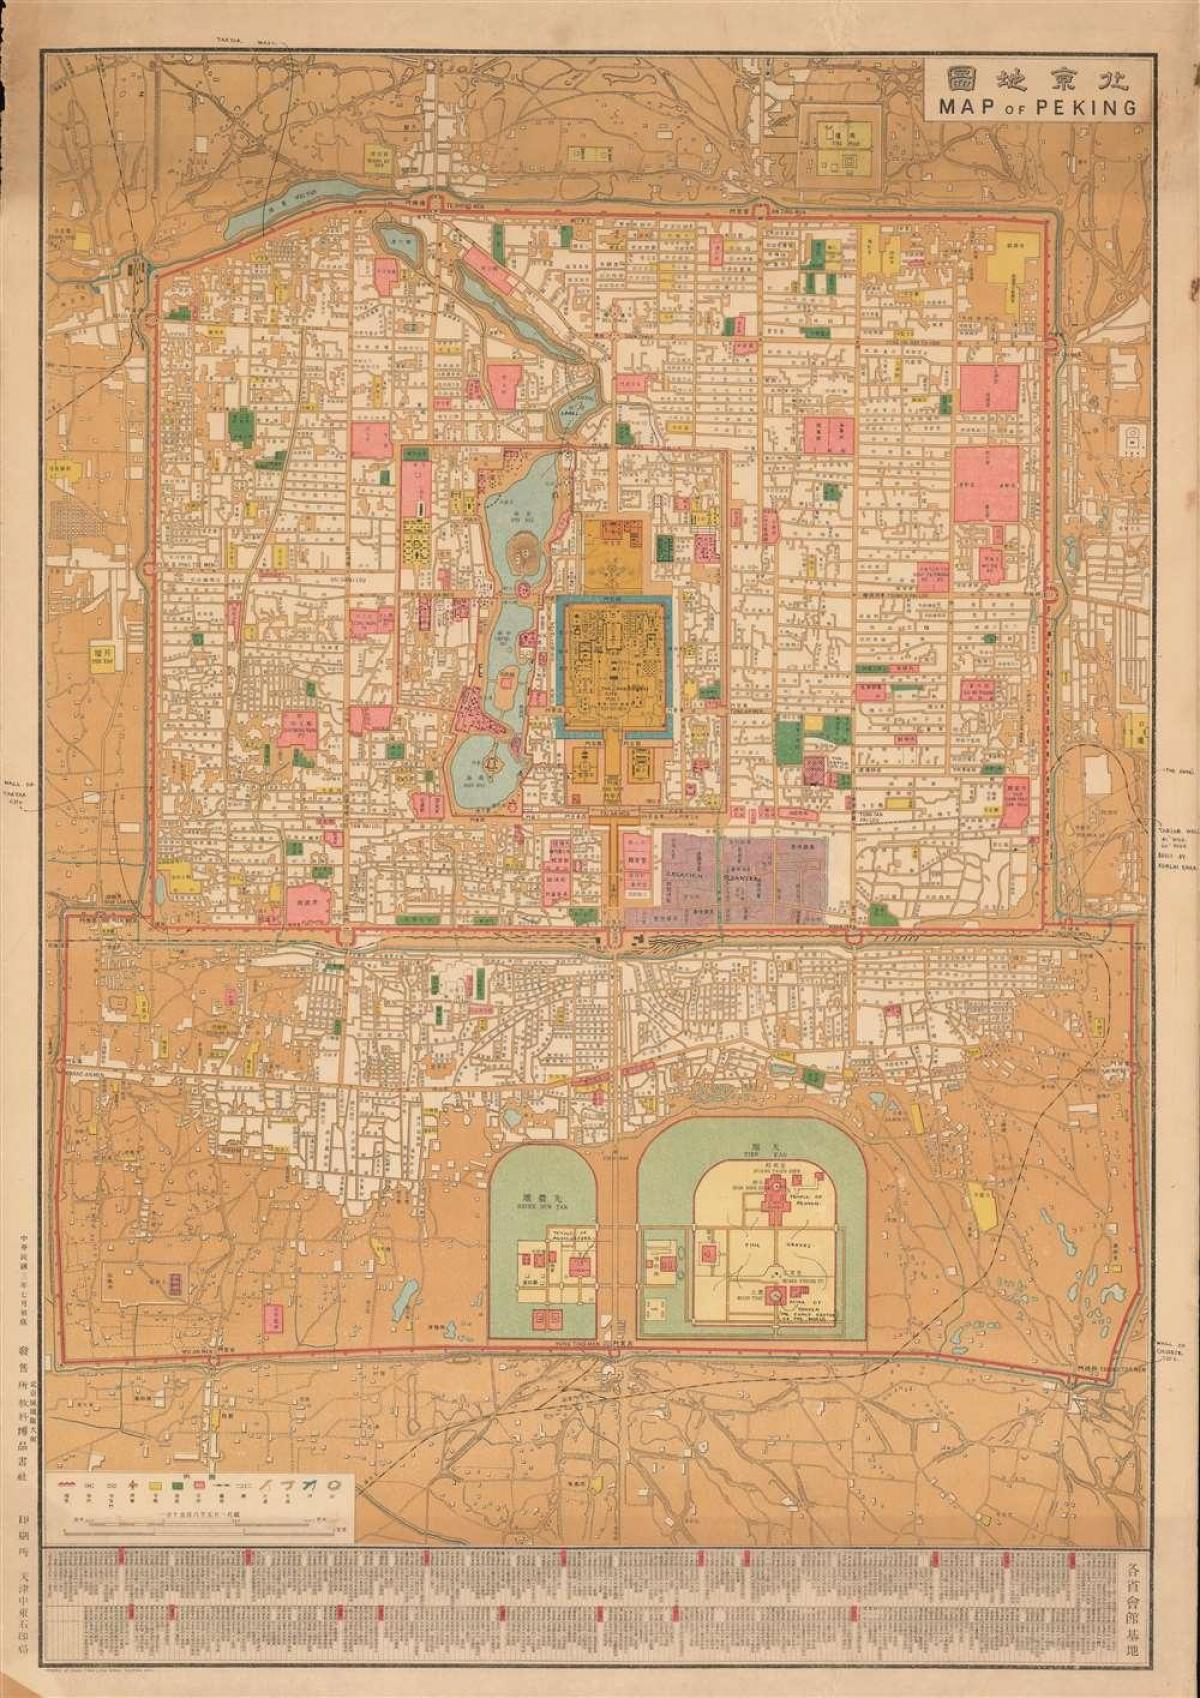 Beijing (Peking) historical map